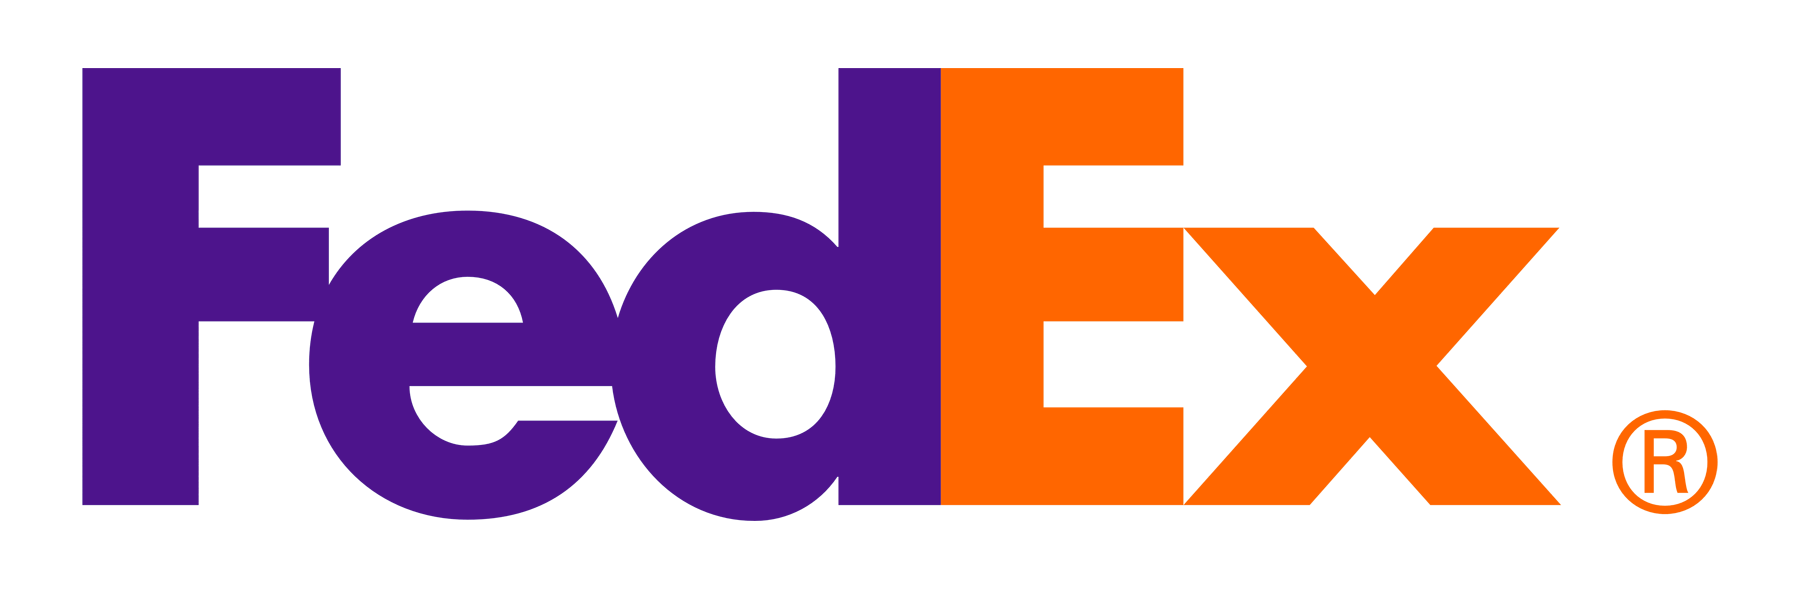 Large FedEx Ground Logo - FedEx, UPS, Shipping Services, Hays, KS., Motor Freight, Crate ...